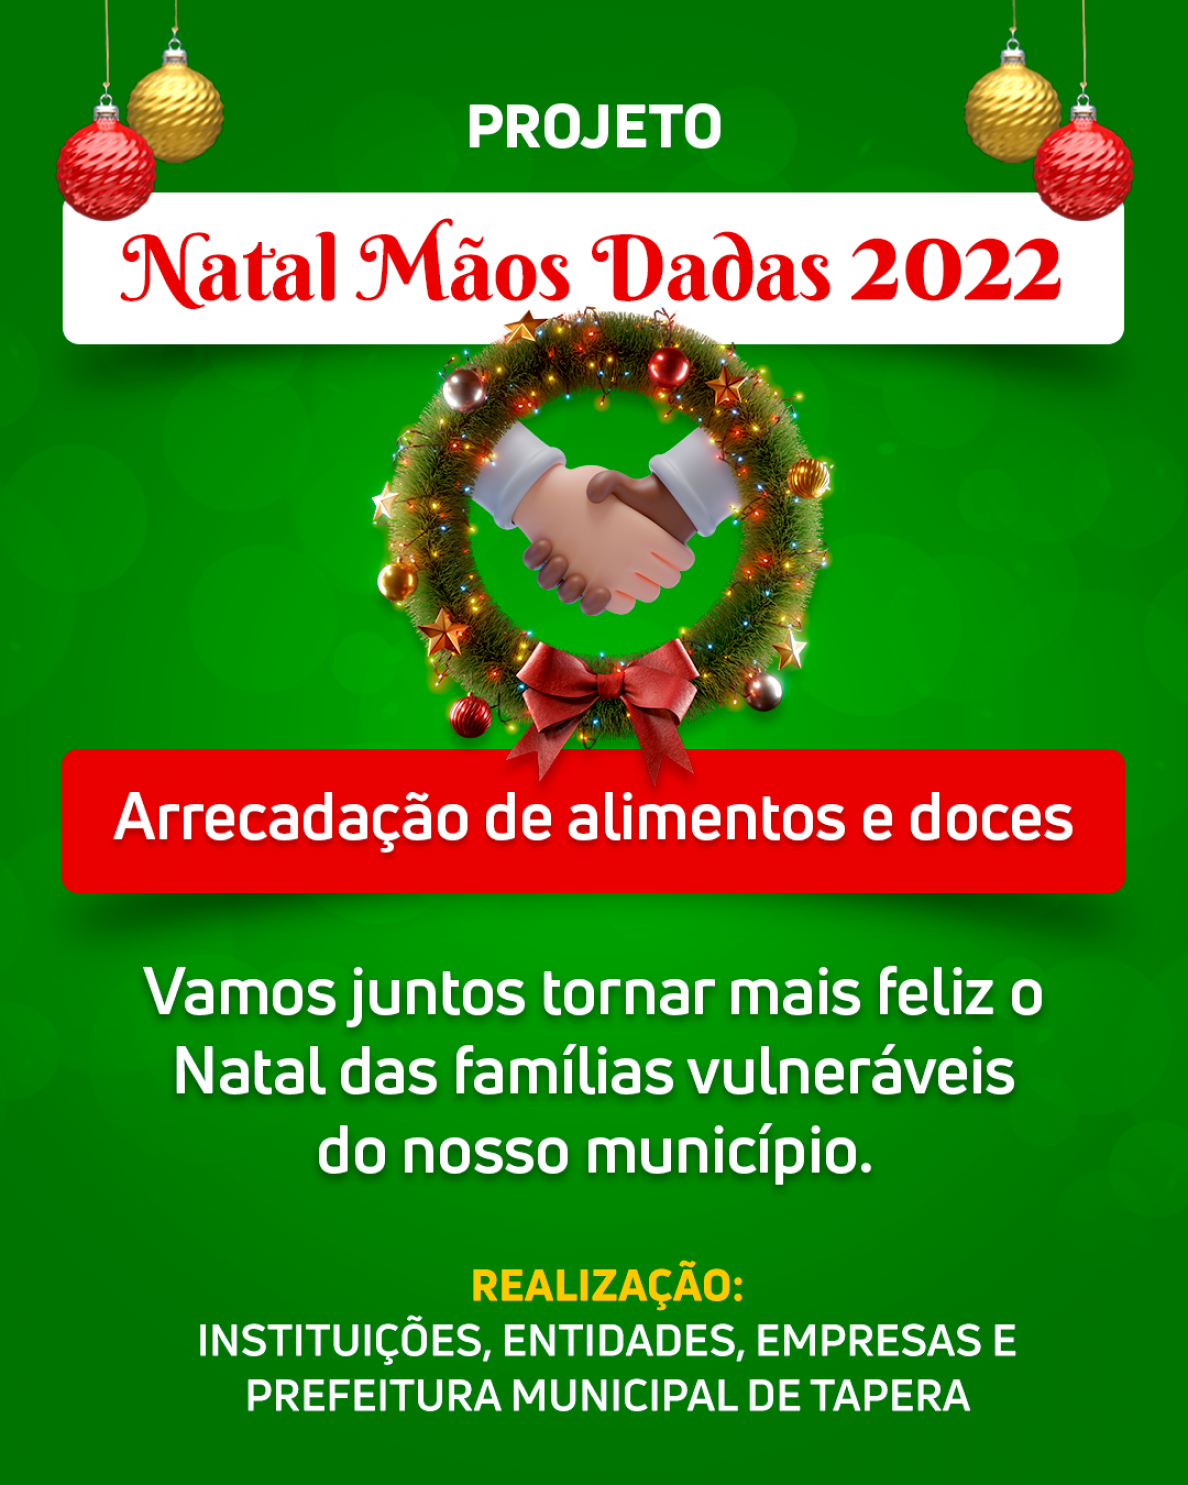 PROJETO NATAL MÃOS DADAS 2022